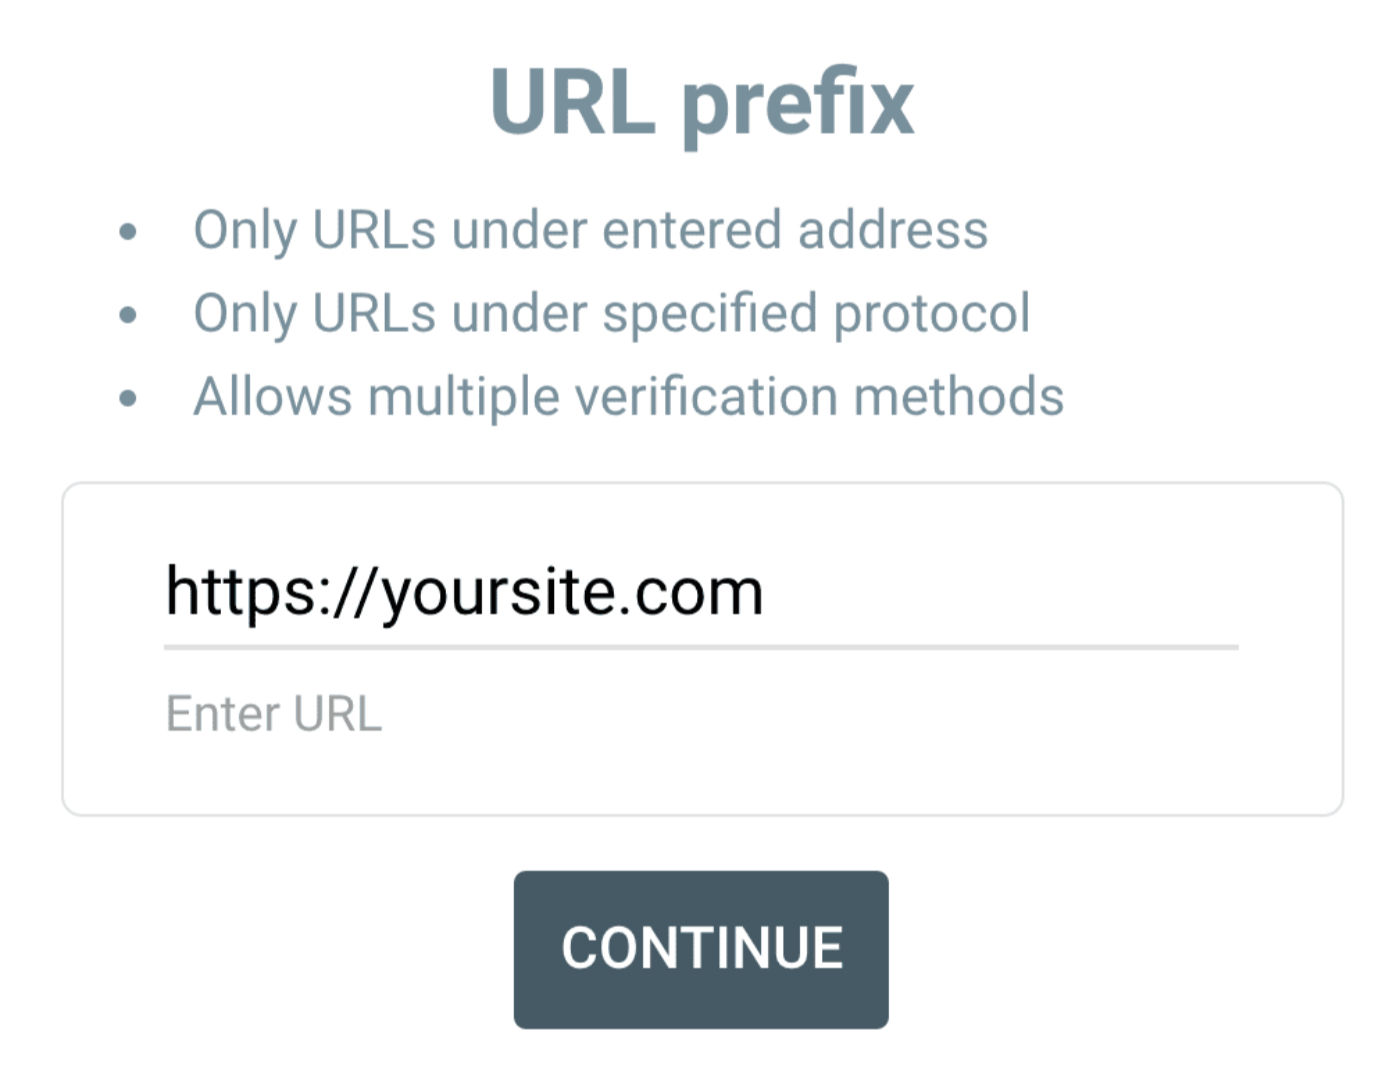 Enter your full website URL in the URL prefix box in Google Search Console